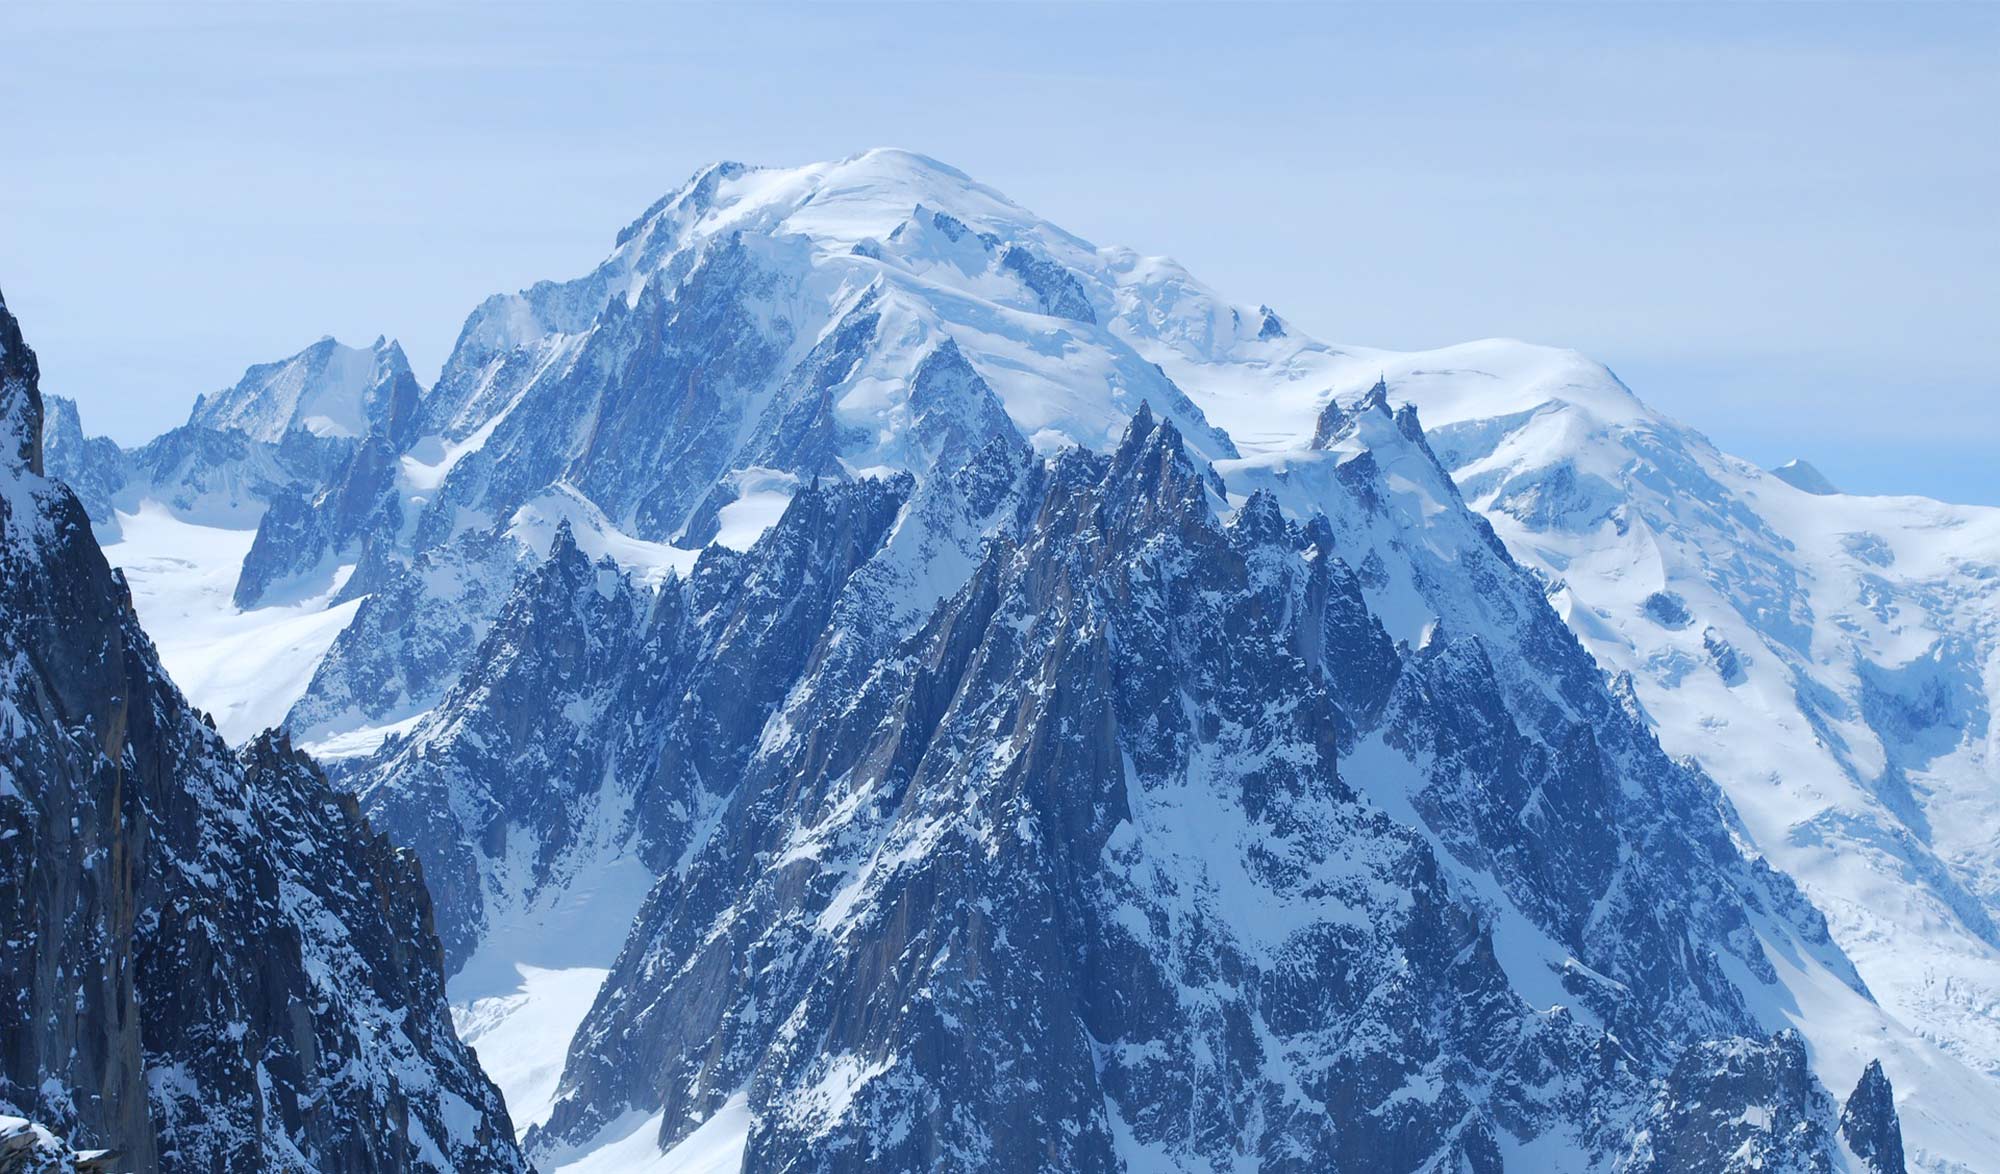 Gravir le Mont-Blanc